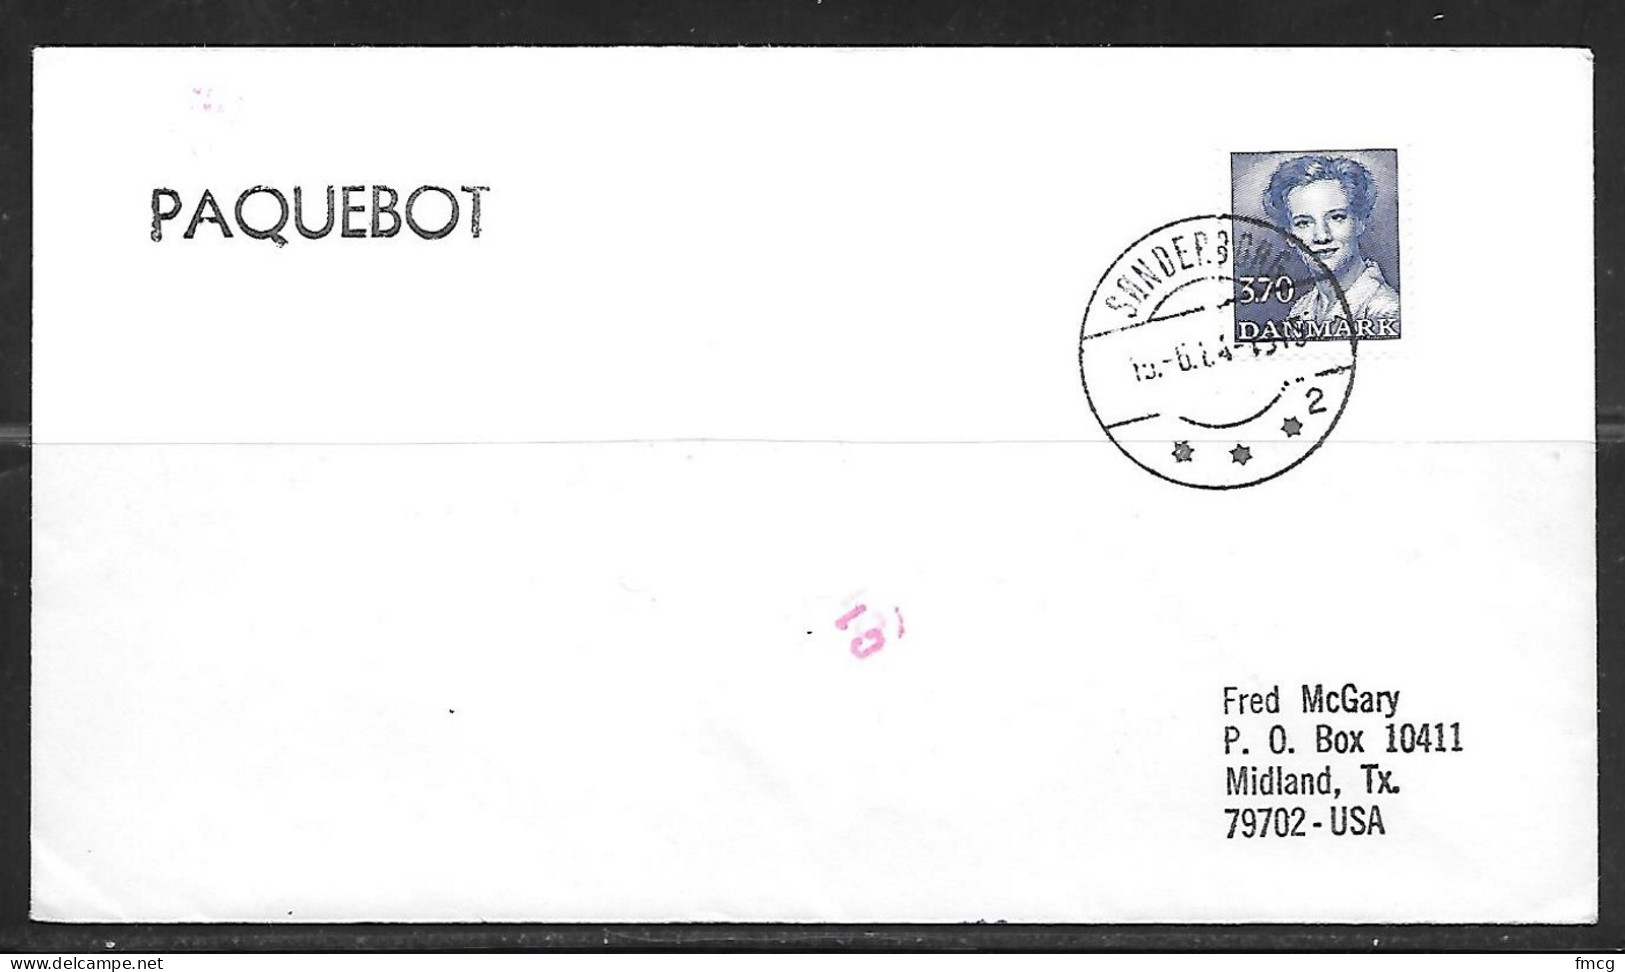 1984 Paquebot Cover, Sondeborg, Denmark - Lettres & Documents